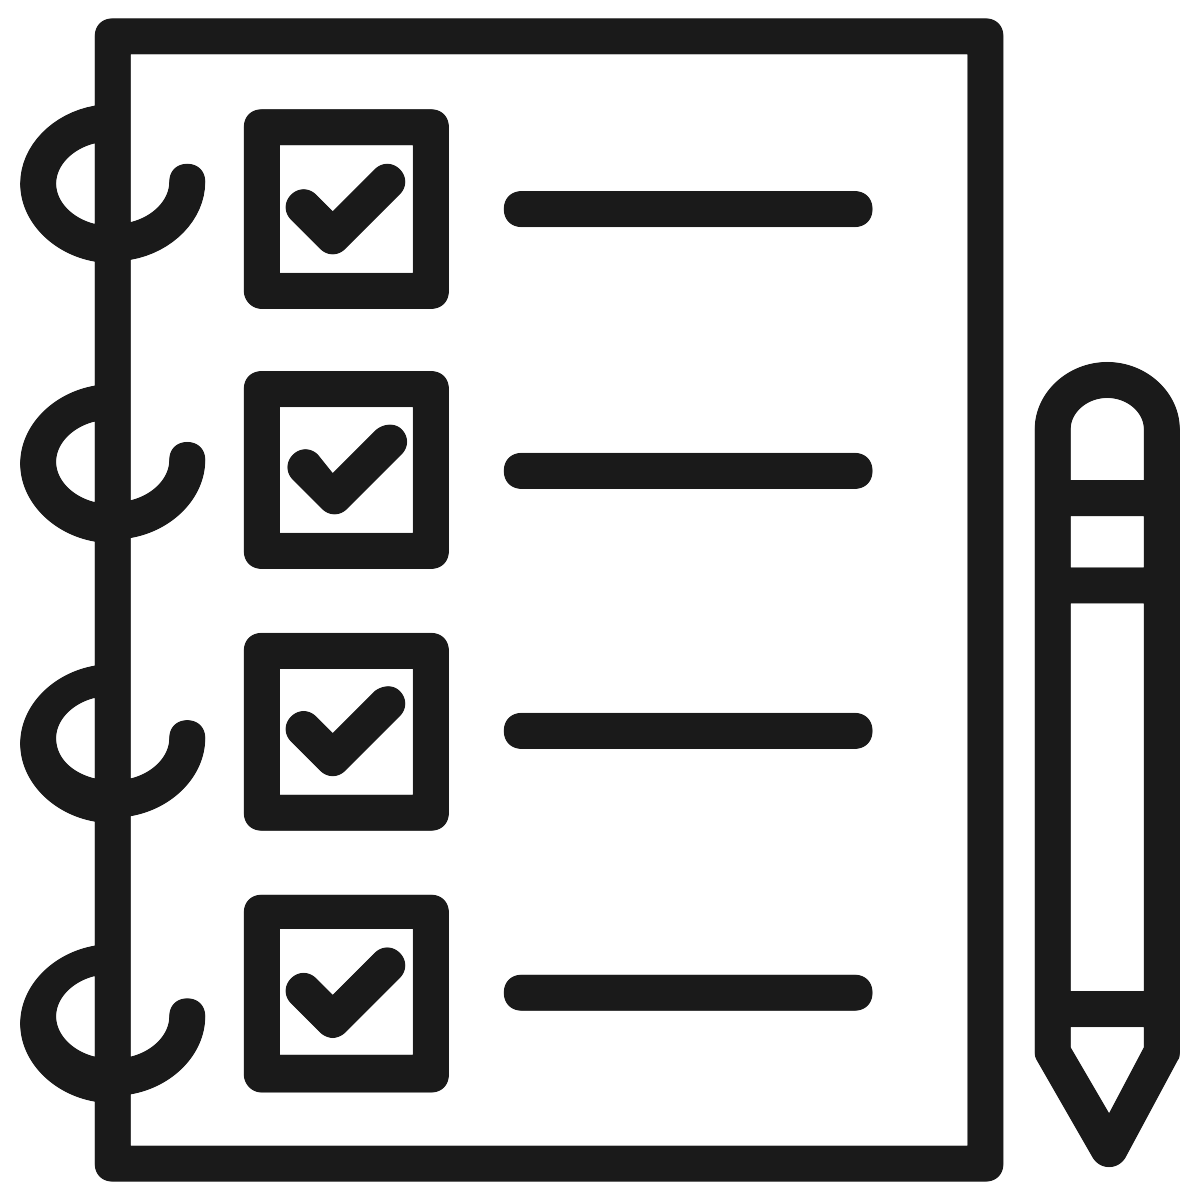 Degree Requirements Checklist Icon